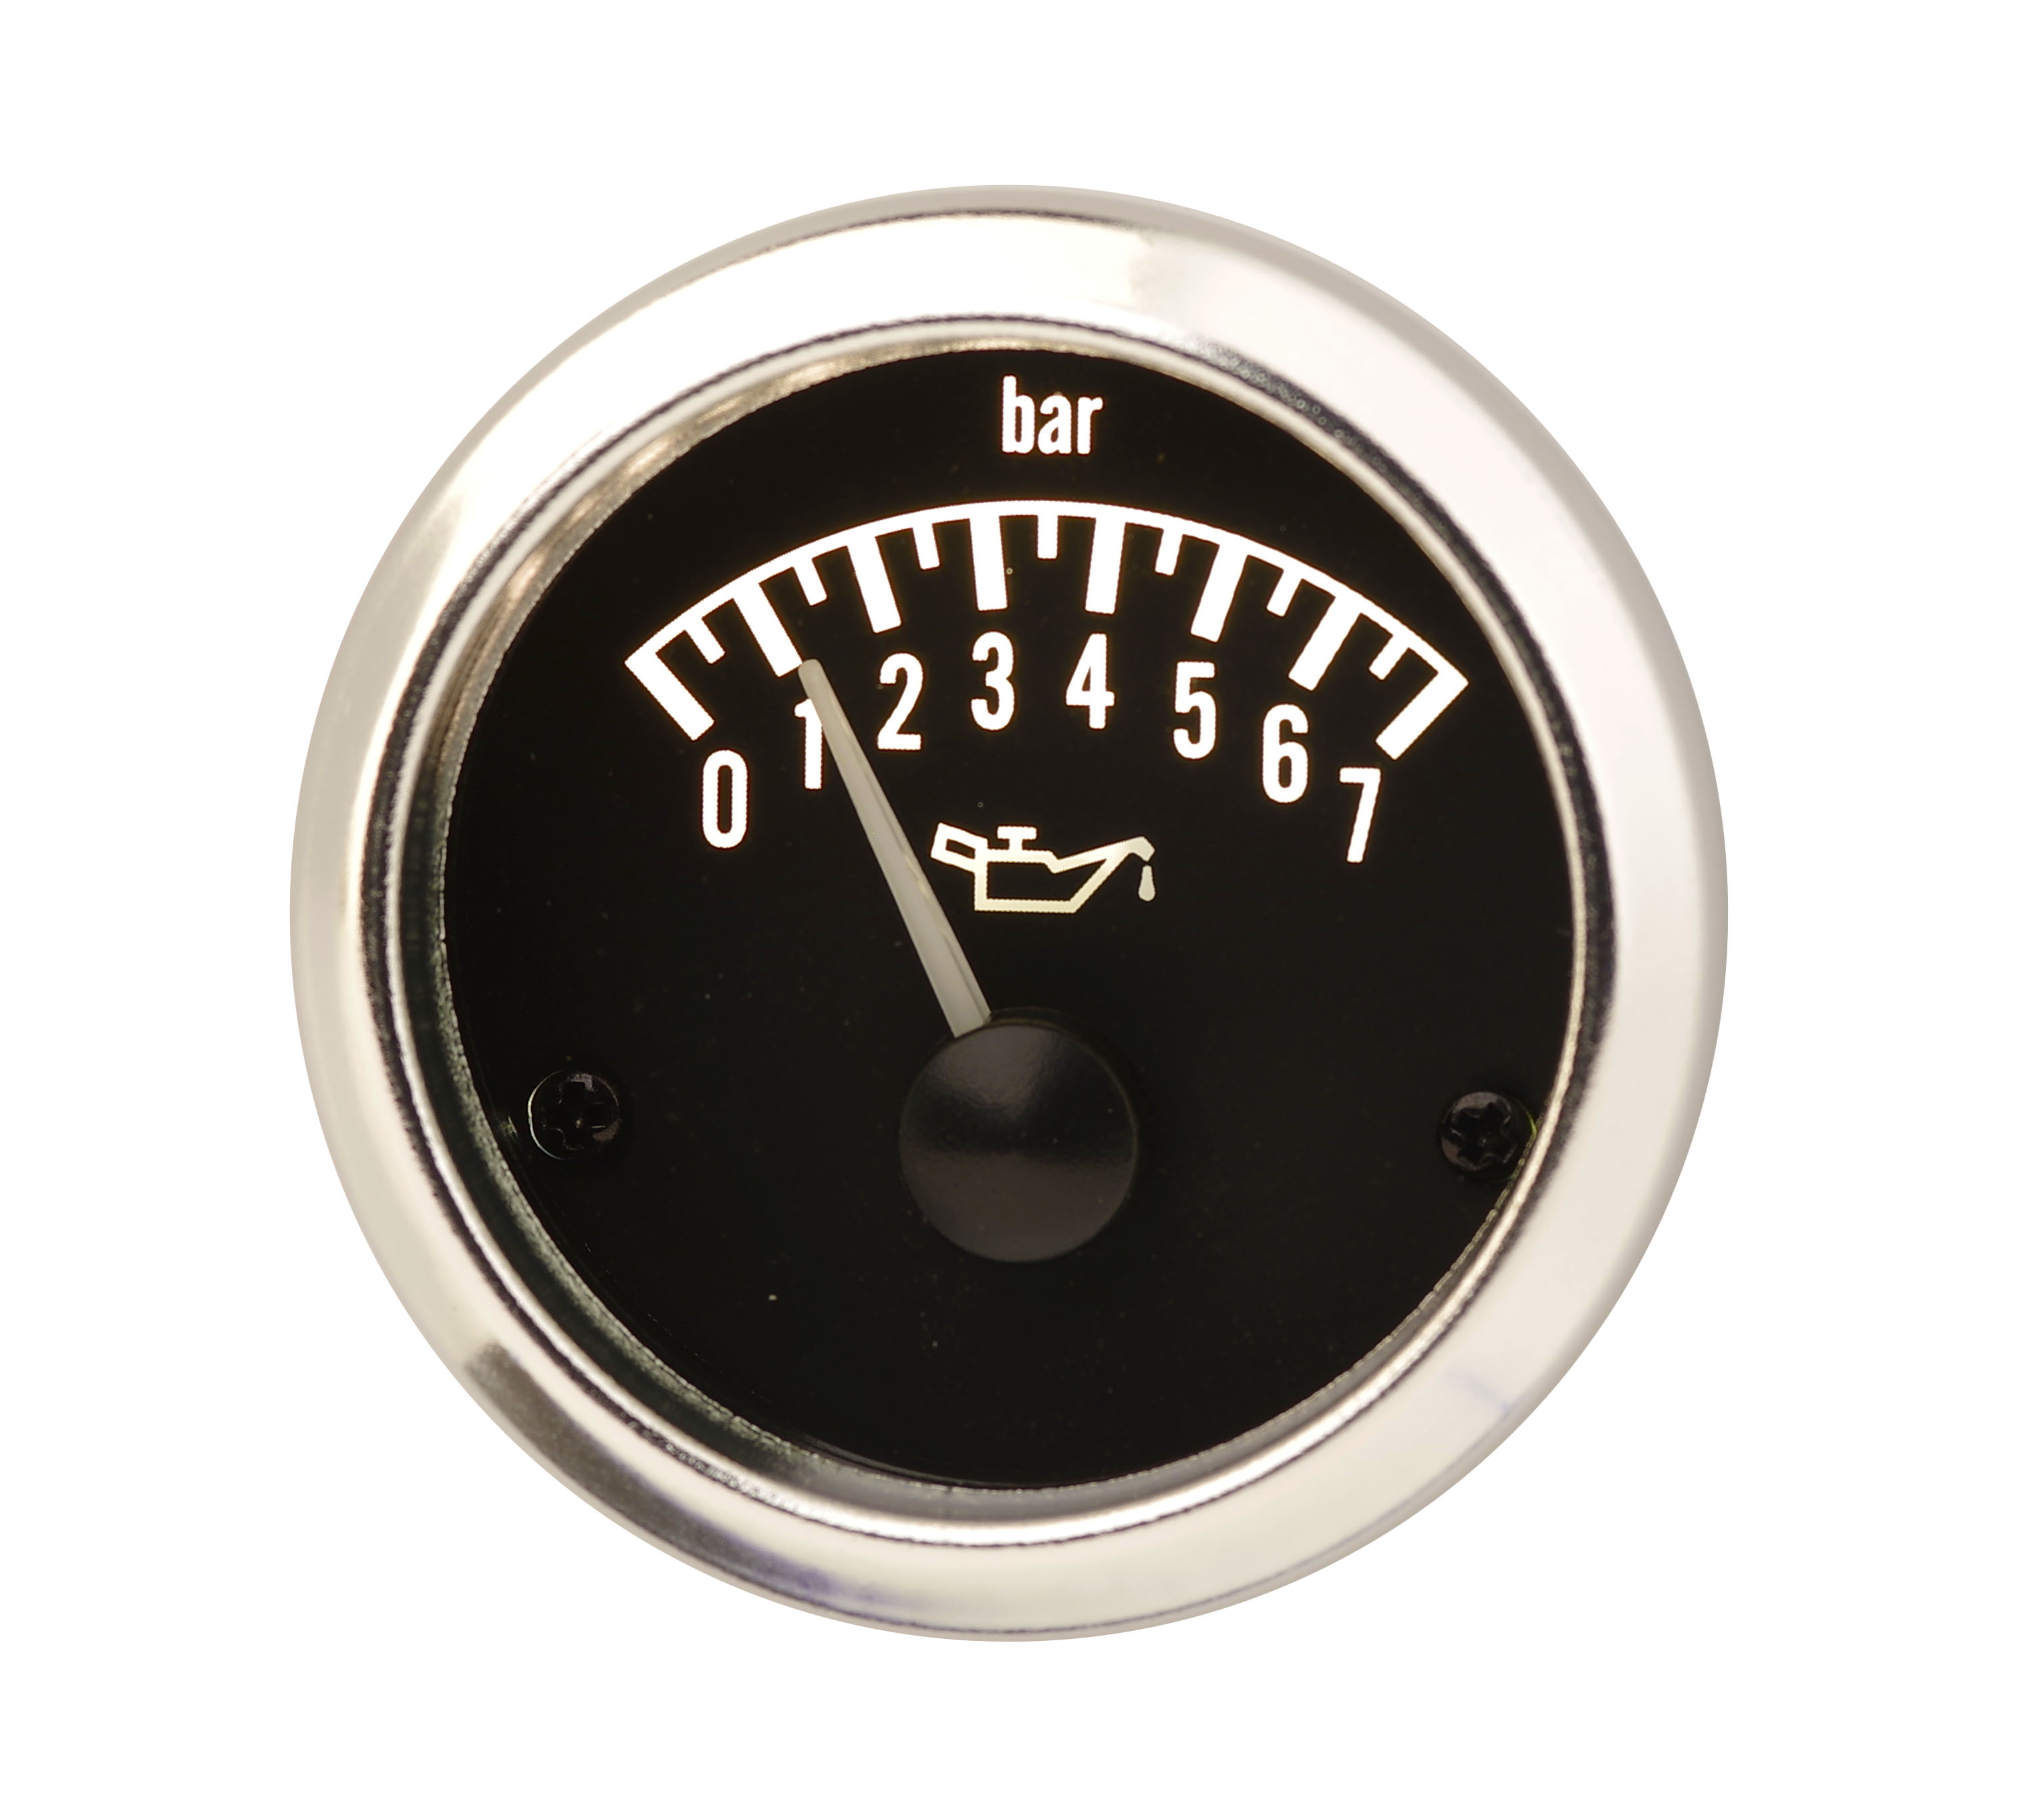 Öldruckinstrument
Oil pressure gauge
Instrument pour la press